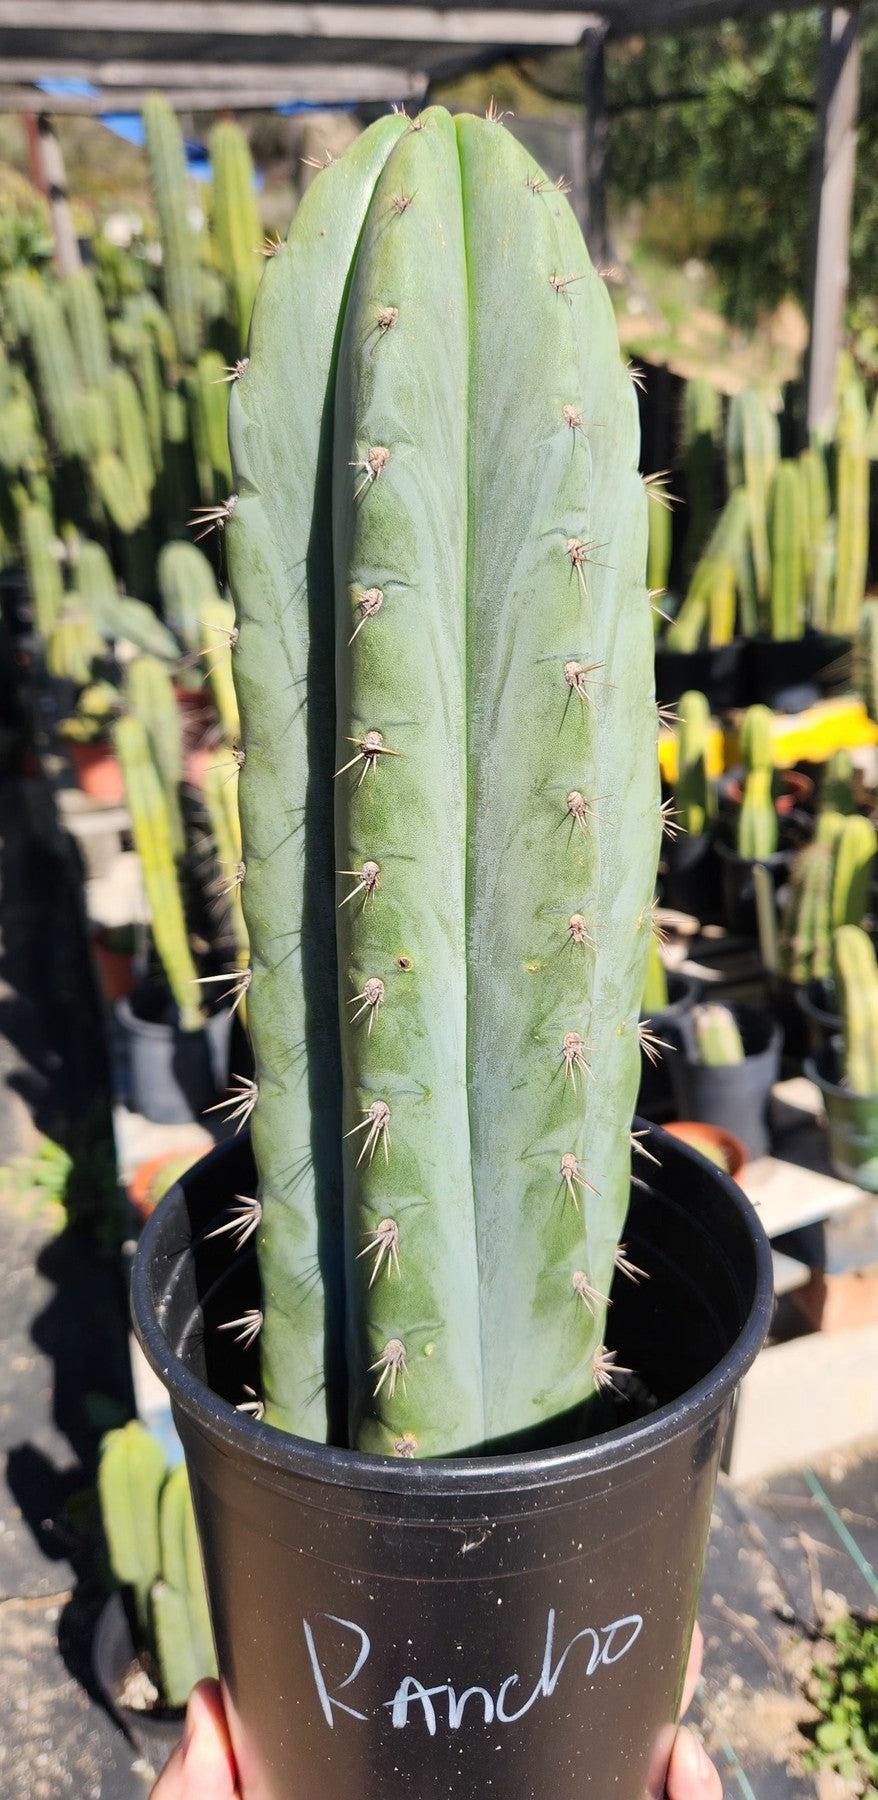 #EC196 EXACT trichocereus Peruvianus "Rancho" Ornamental Cactus Cuttings and Potted-Cactus - Large - Exact-The Succulent Source